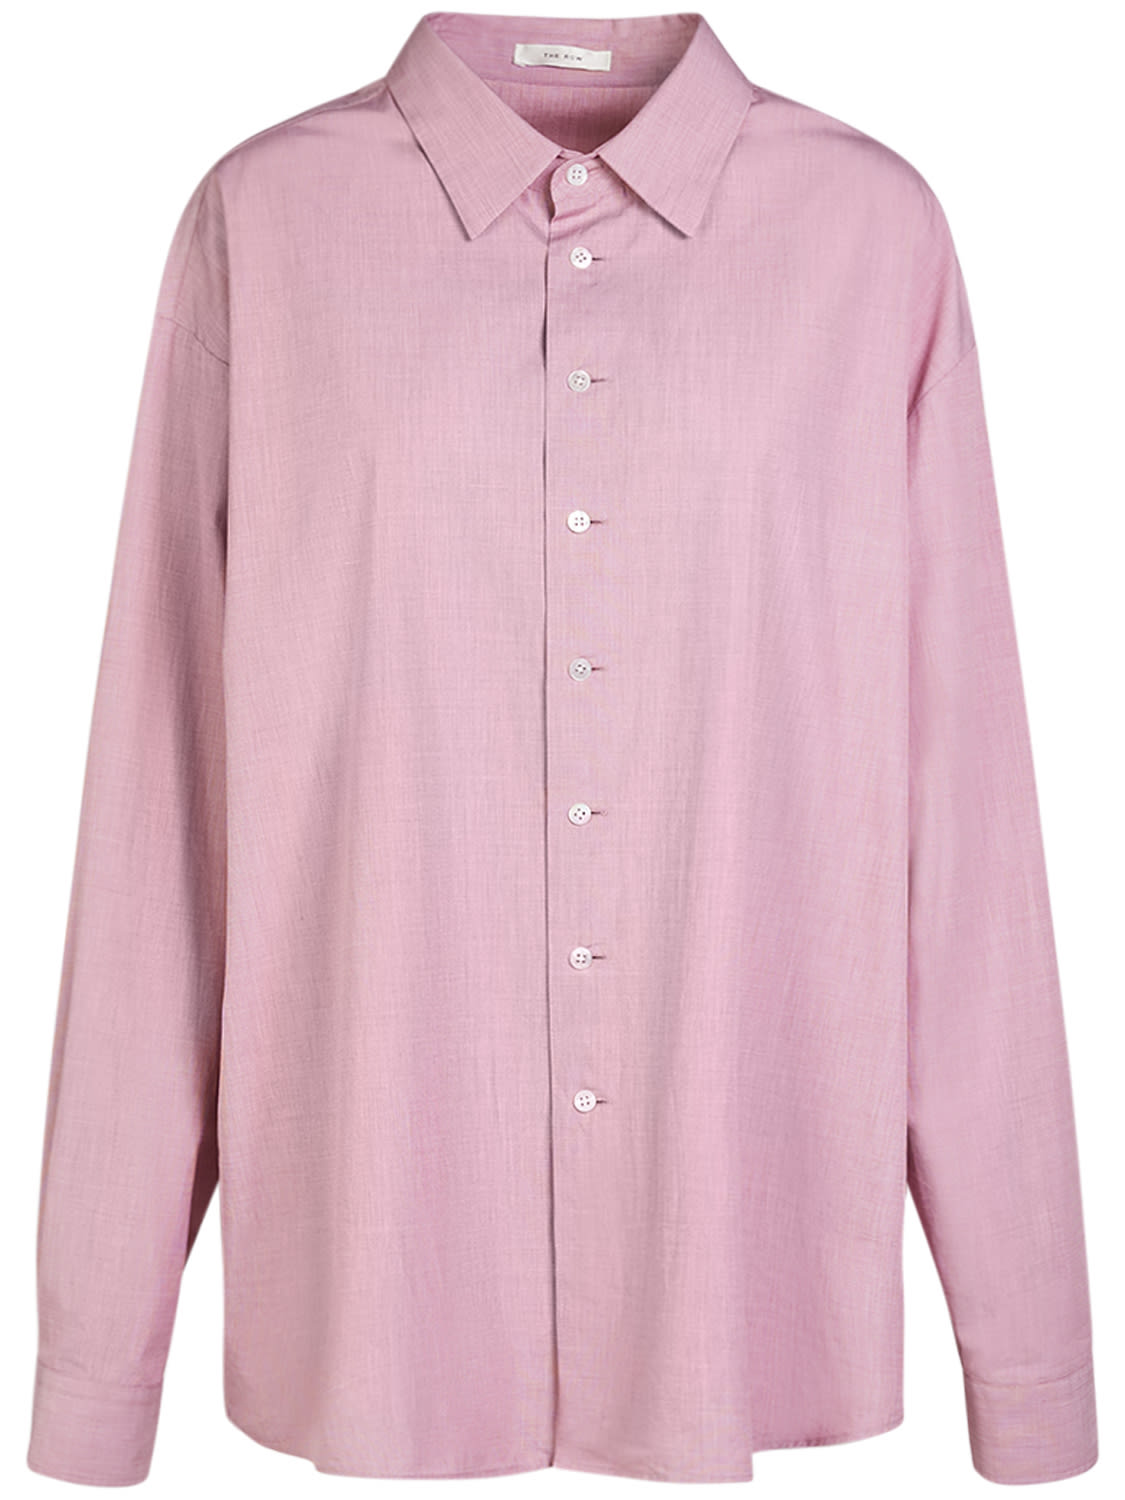 Shop The Row Attica Poplin Shirt In Pink